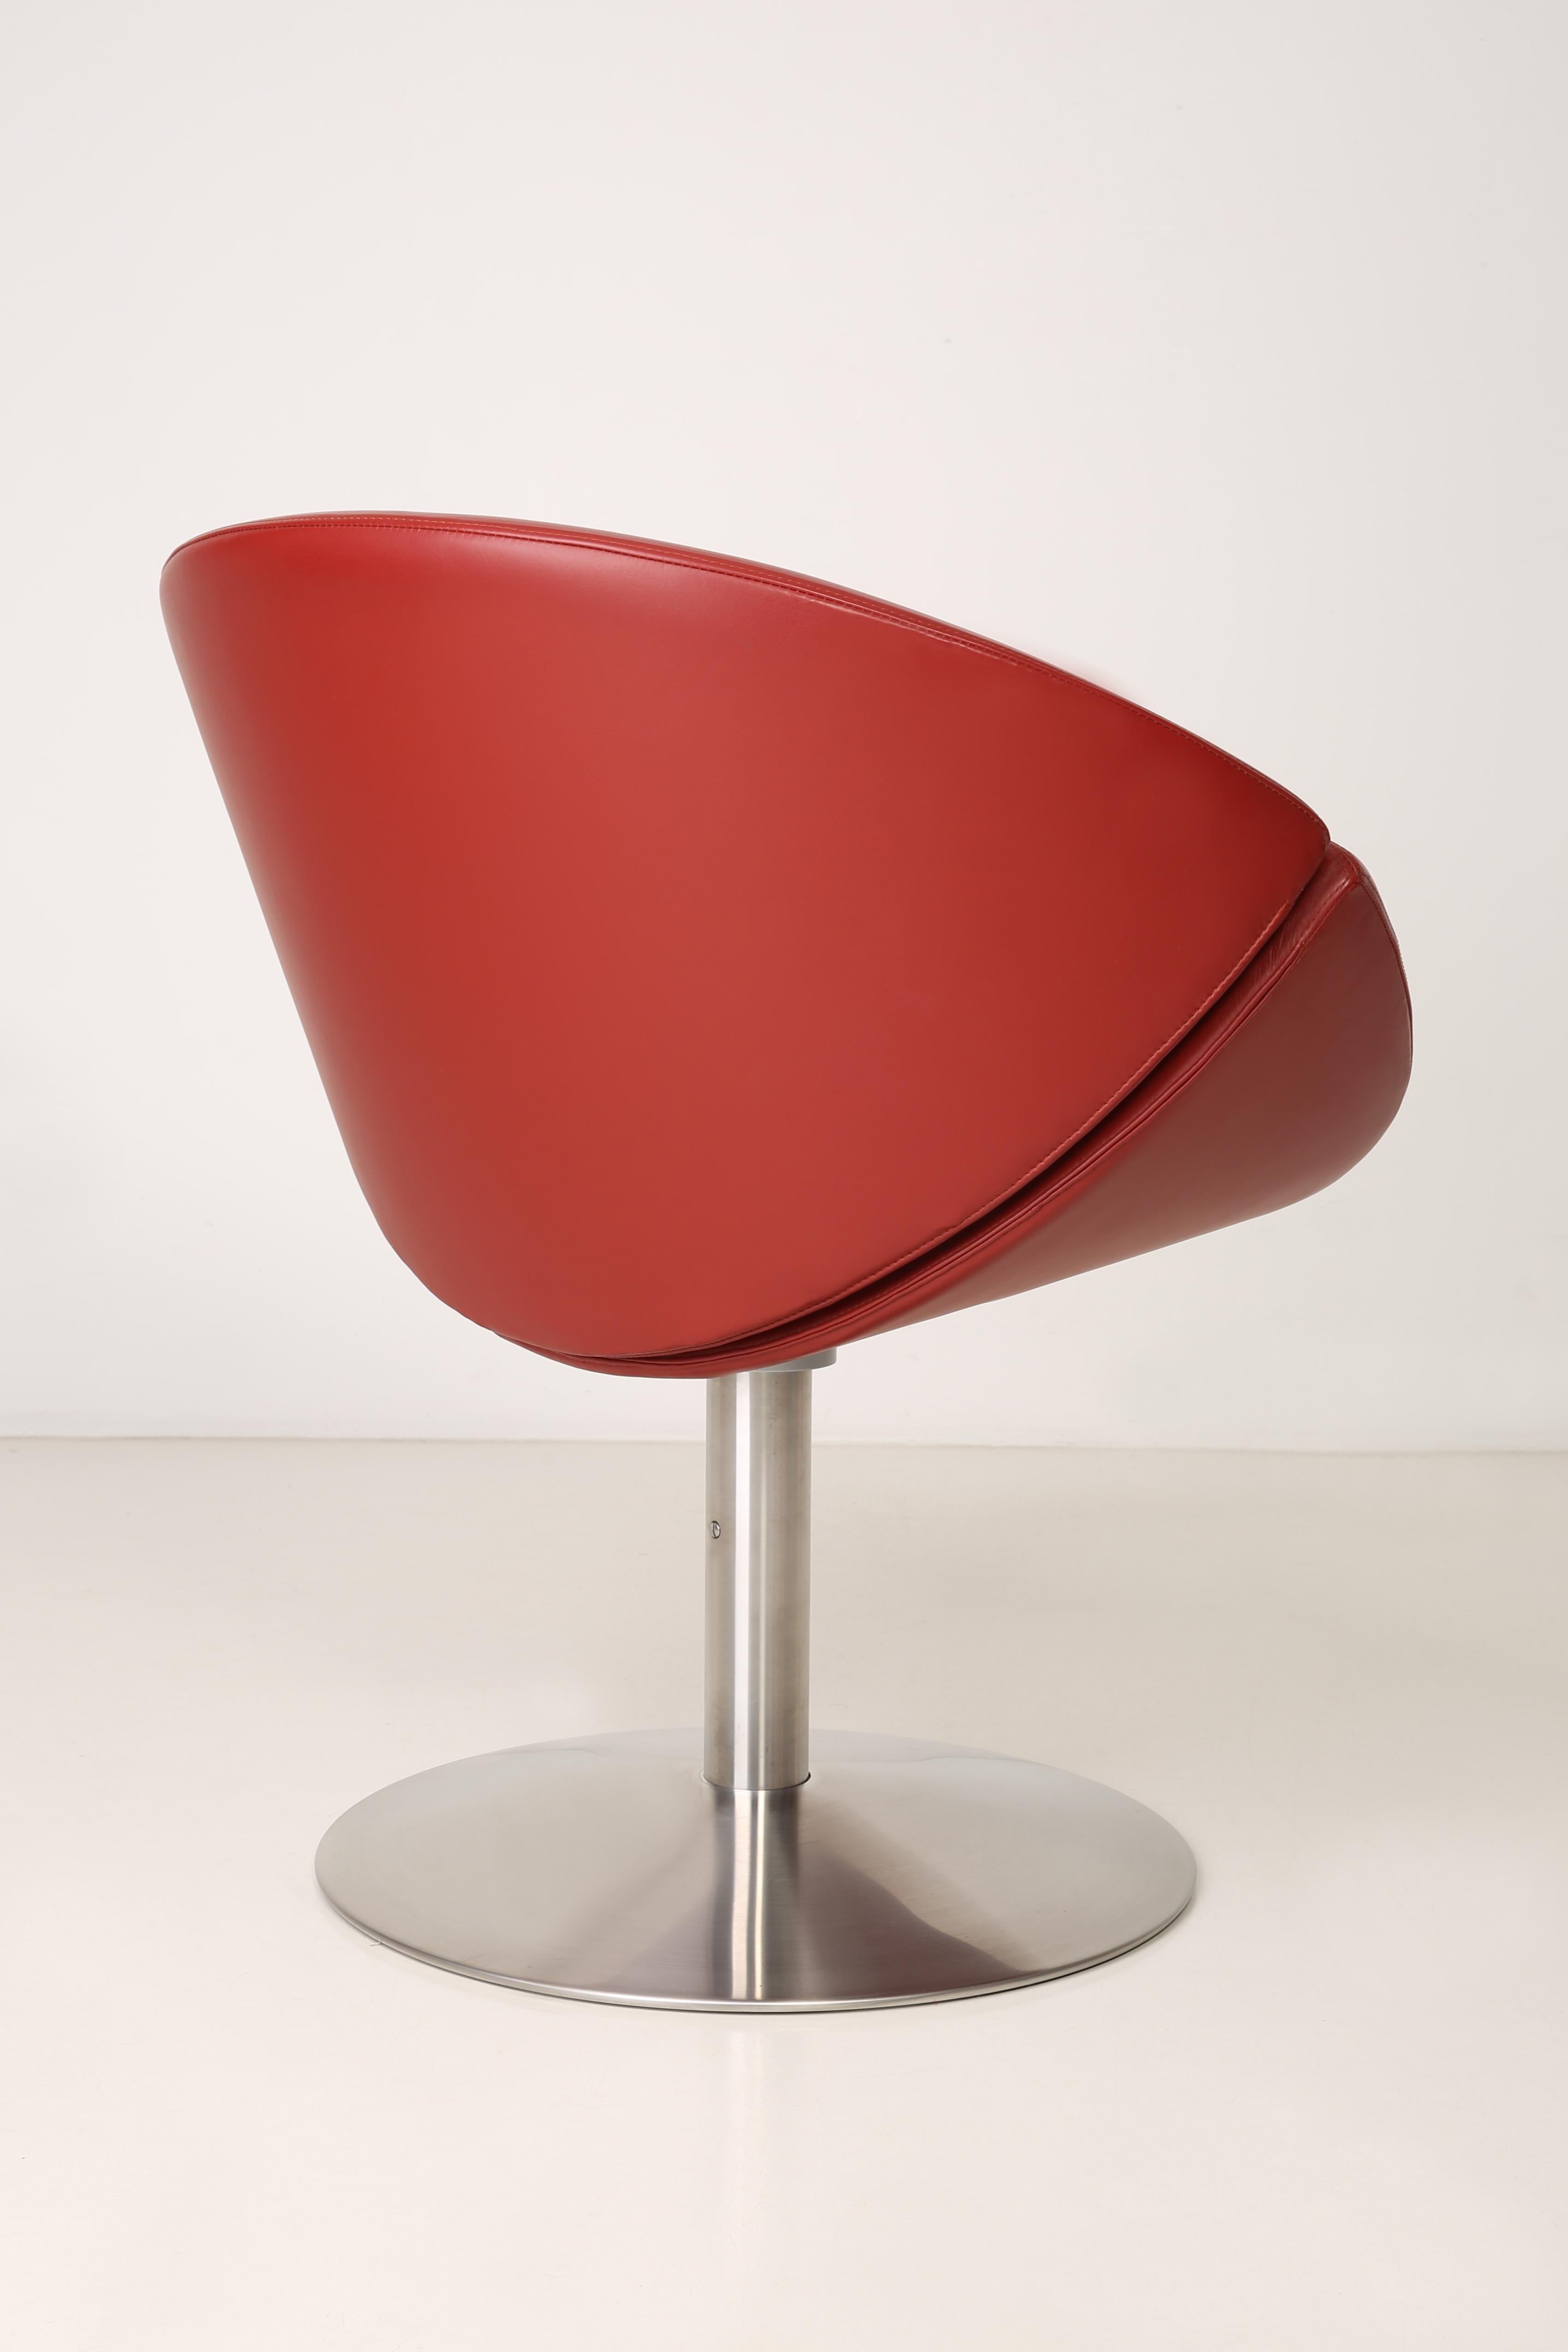 Contemporary Leather Apollo Chair, Erik Jørgensen, 2000s, Denmark